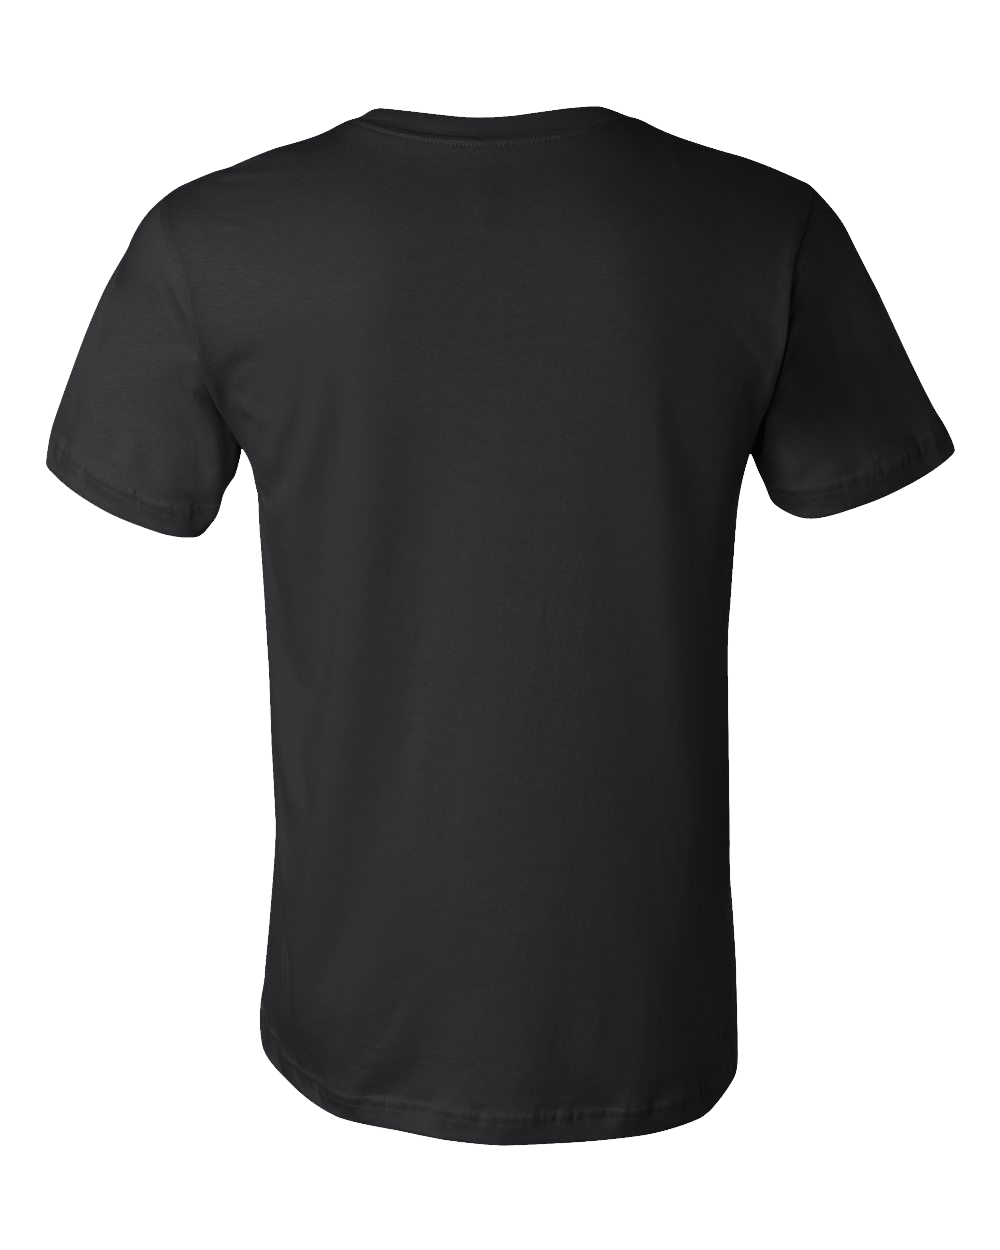 Standard Black Lawson, MO | Retro, Vintage Style Missouri Pride  T-shirt